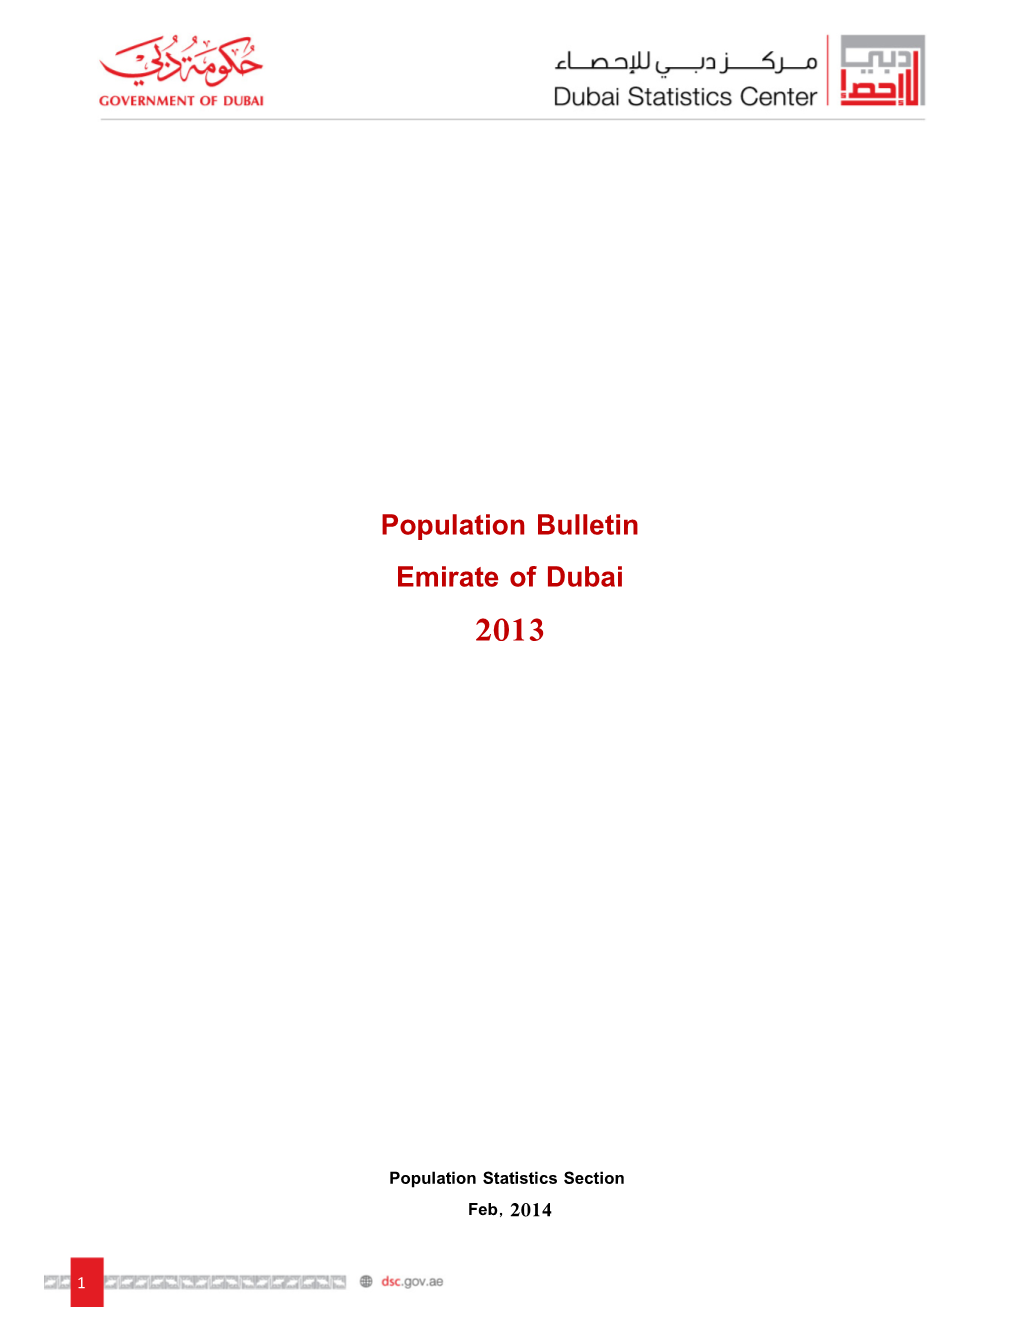 Population Bulletin Emirate of Dubai 2013